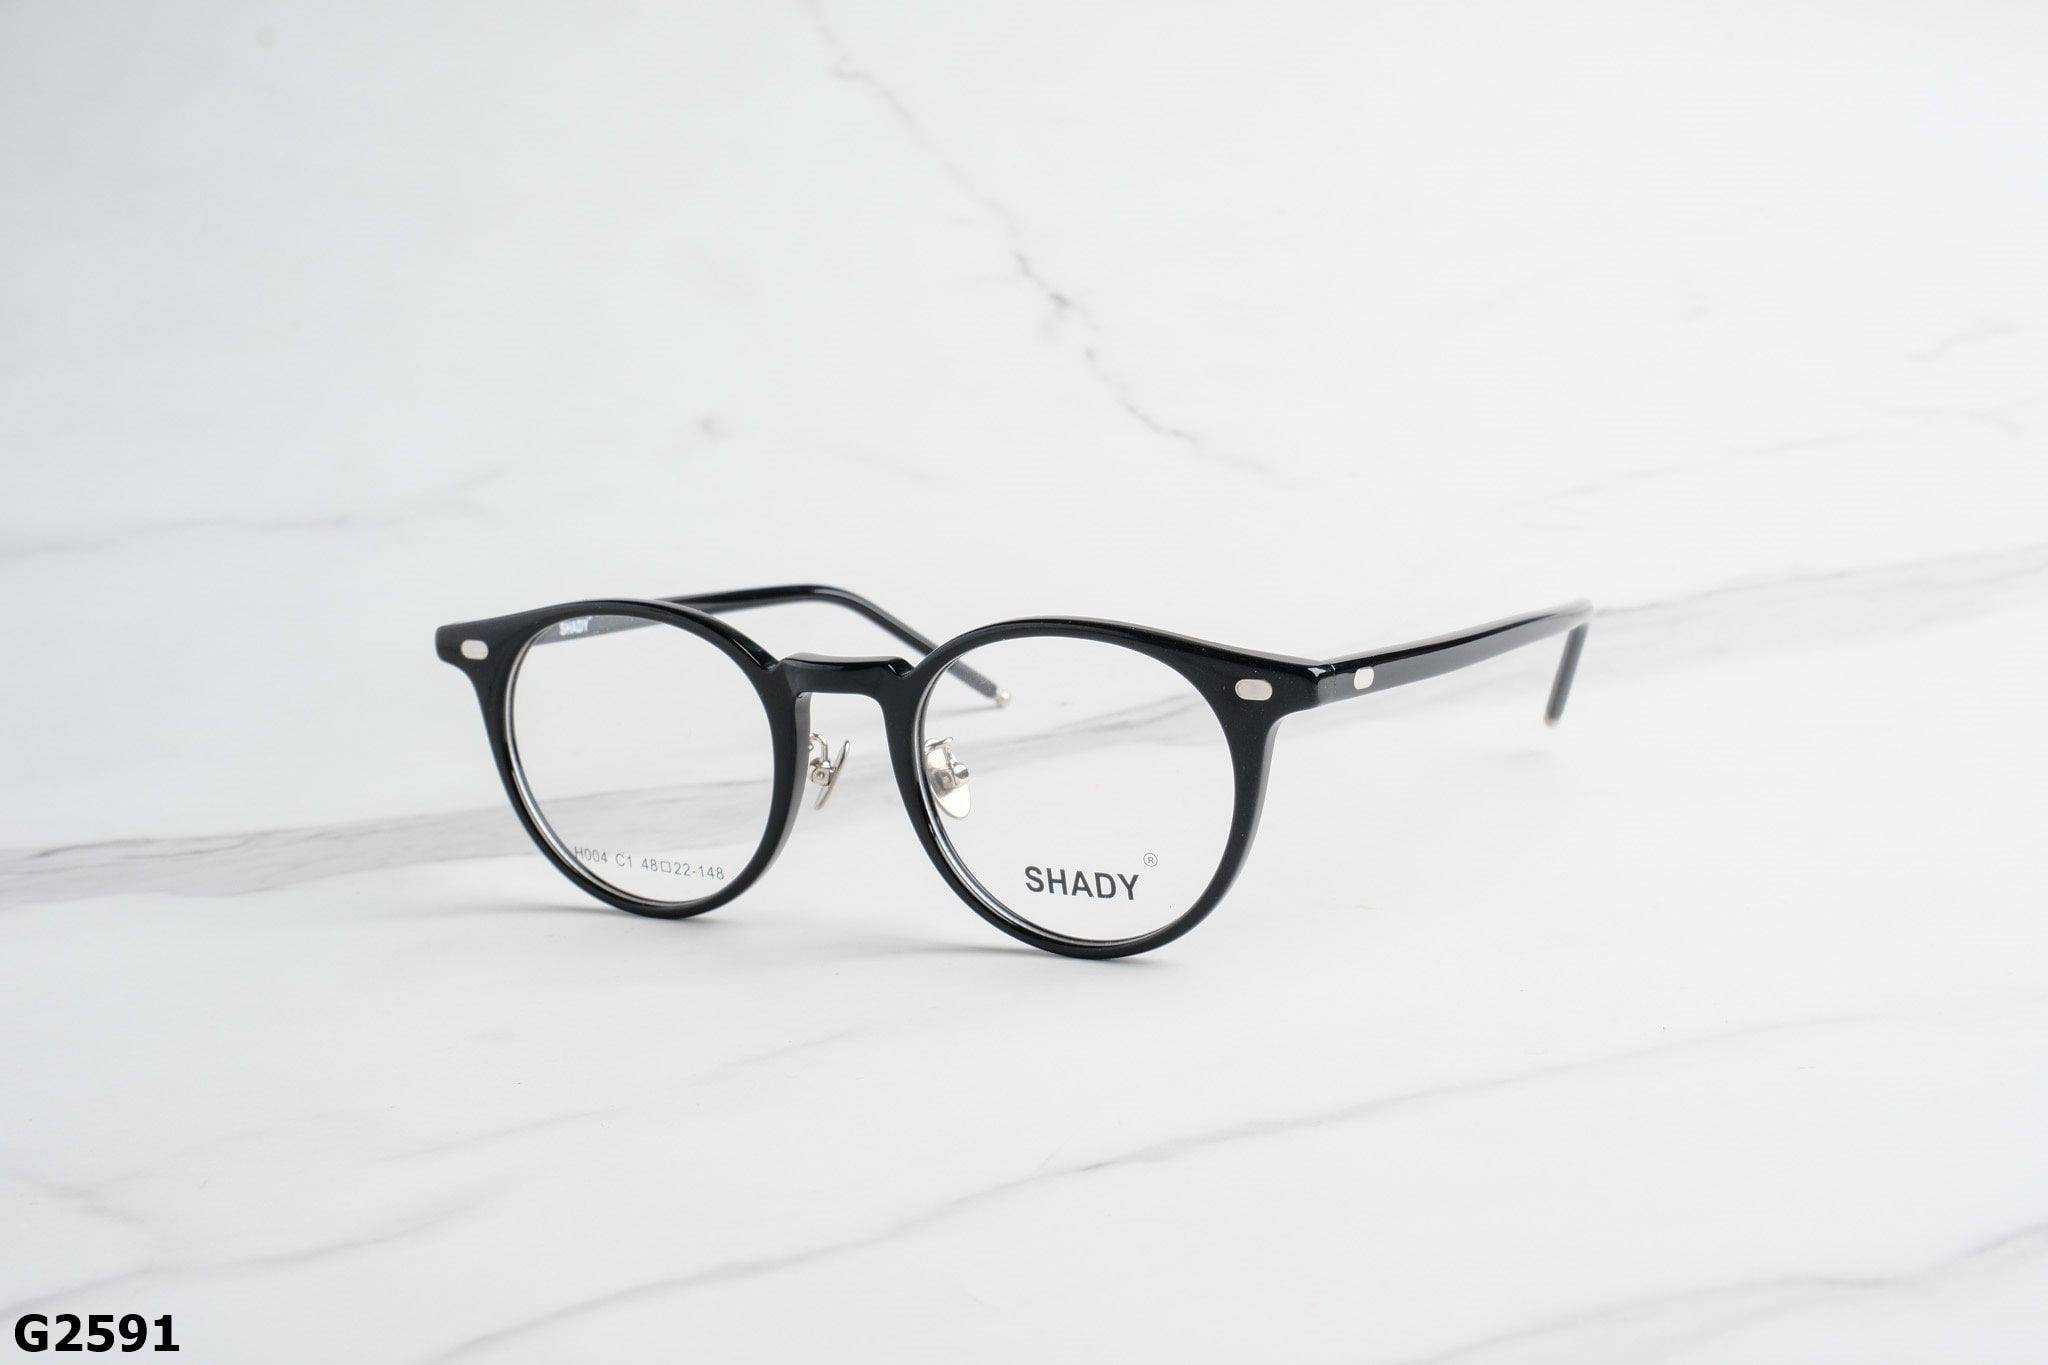  SHADY Eyewear - Glasses - G2591 